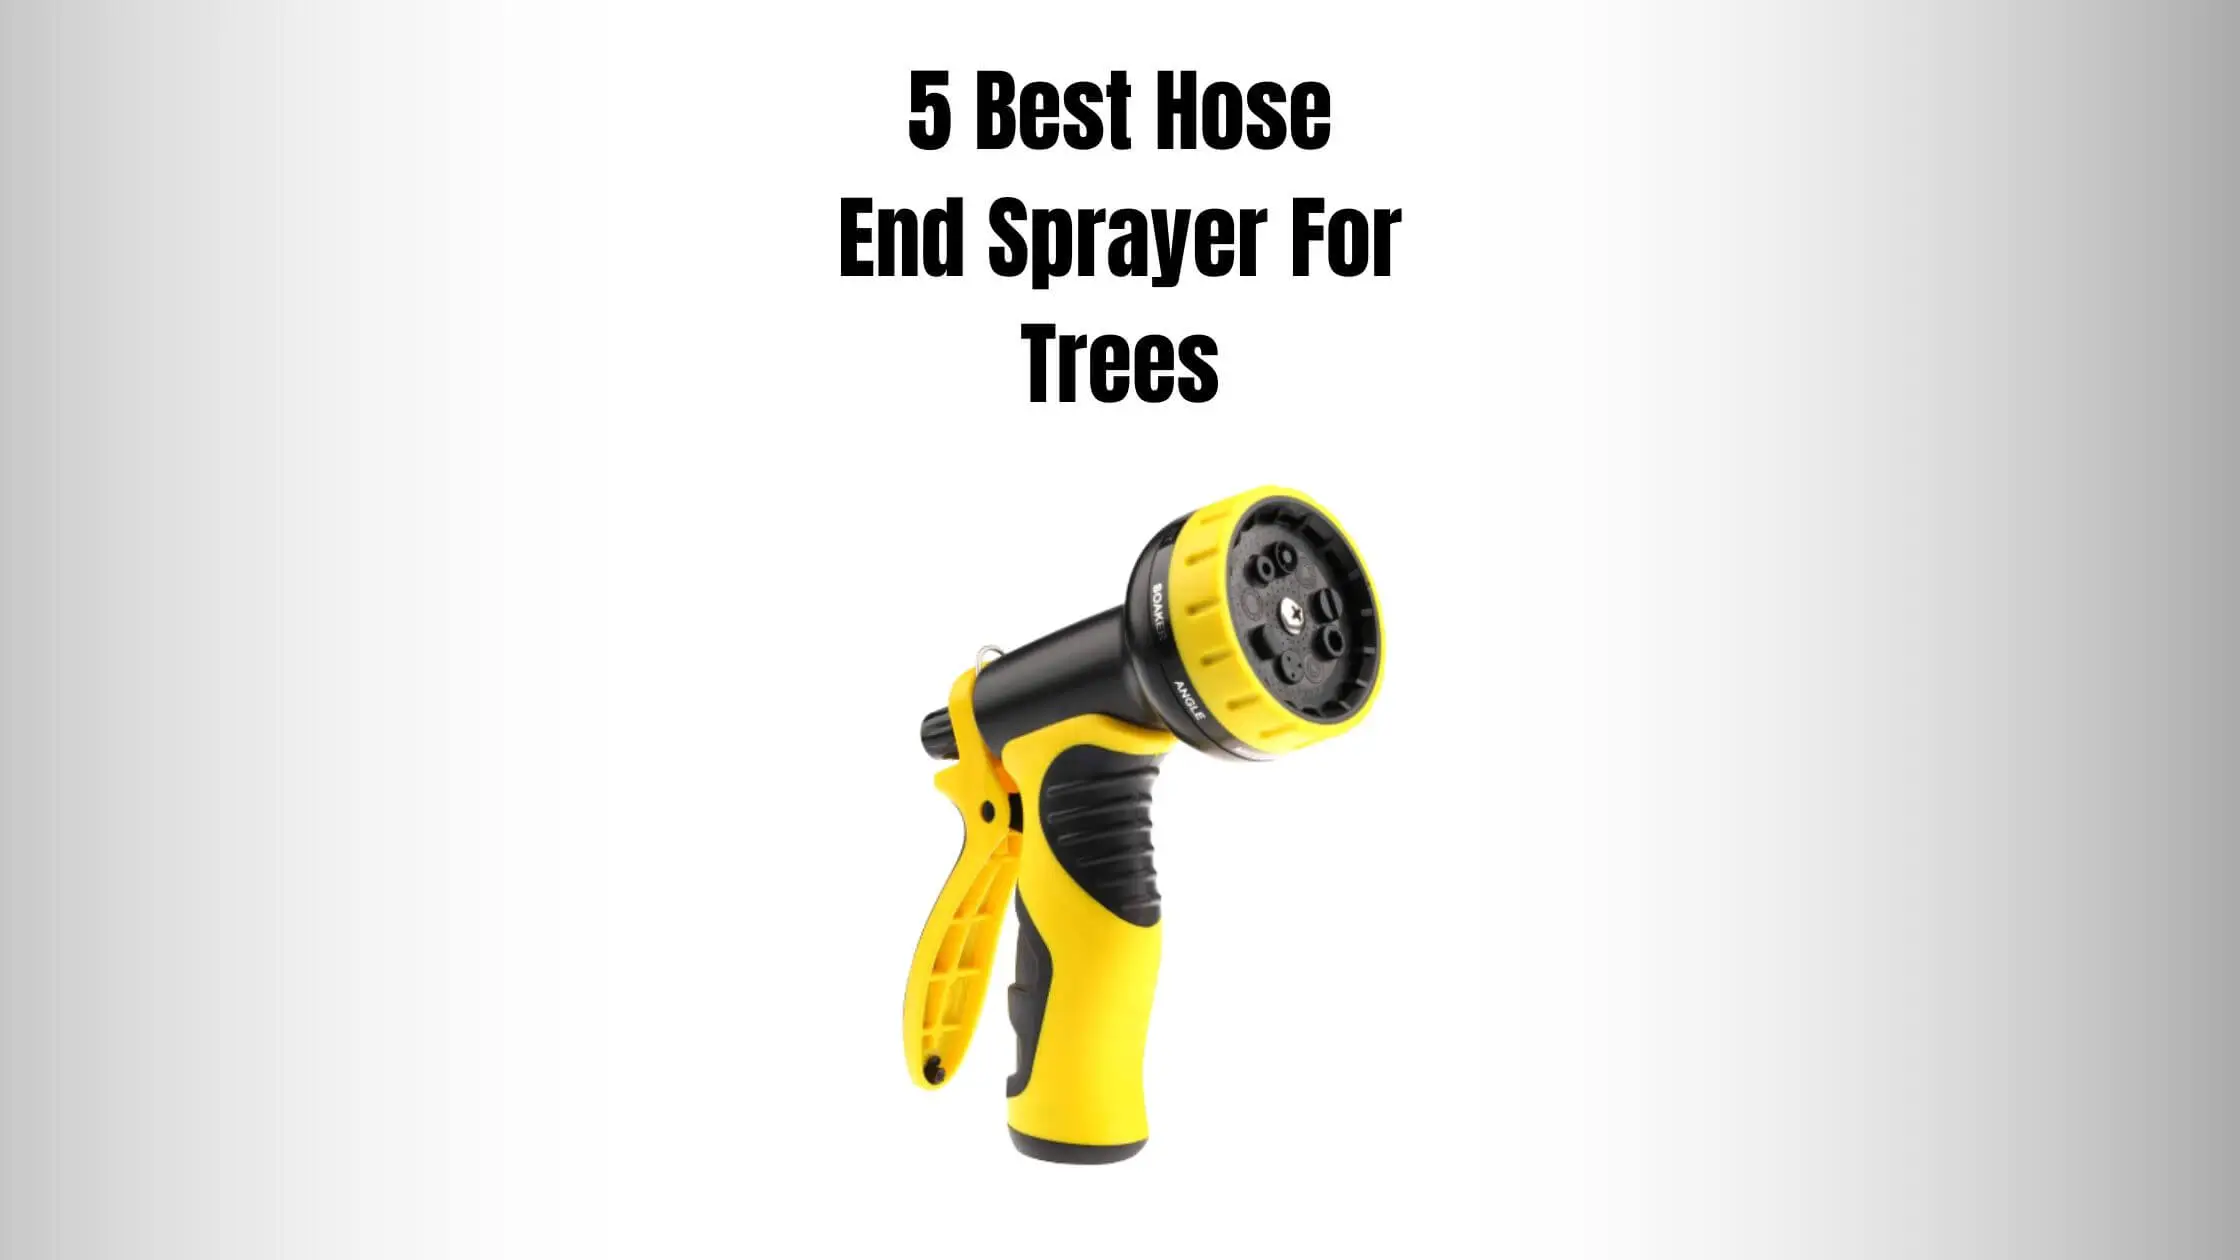 5 Best Hose End Sprayer For Trees